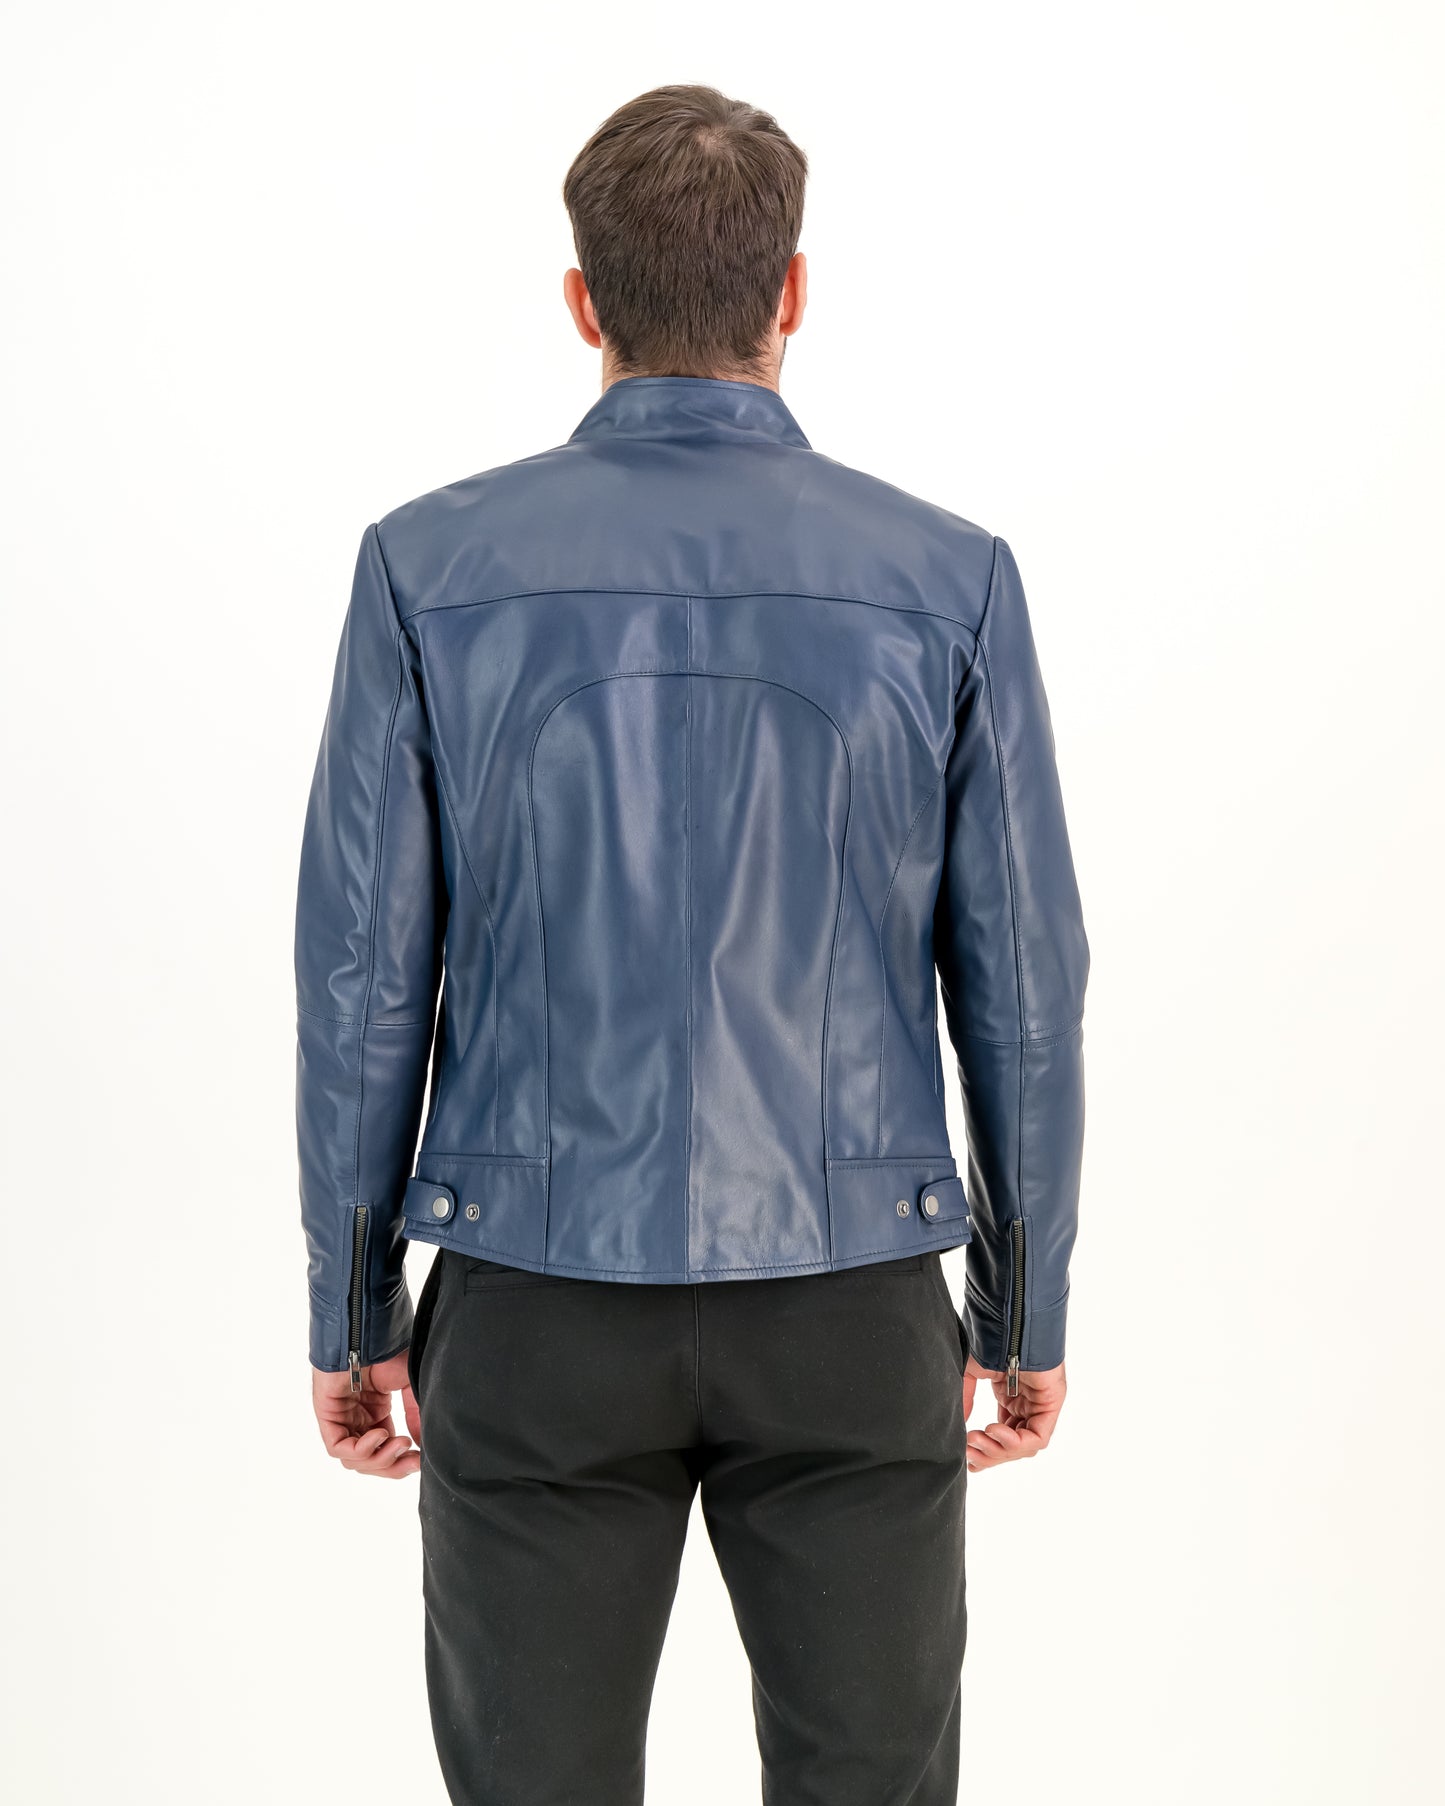 Men's Navy Blue Slim-Fit Leather Jacket- Supreme Leather Supreme Leather